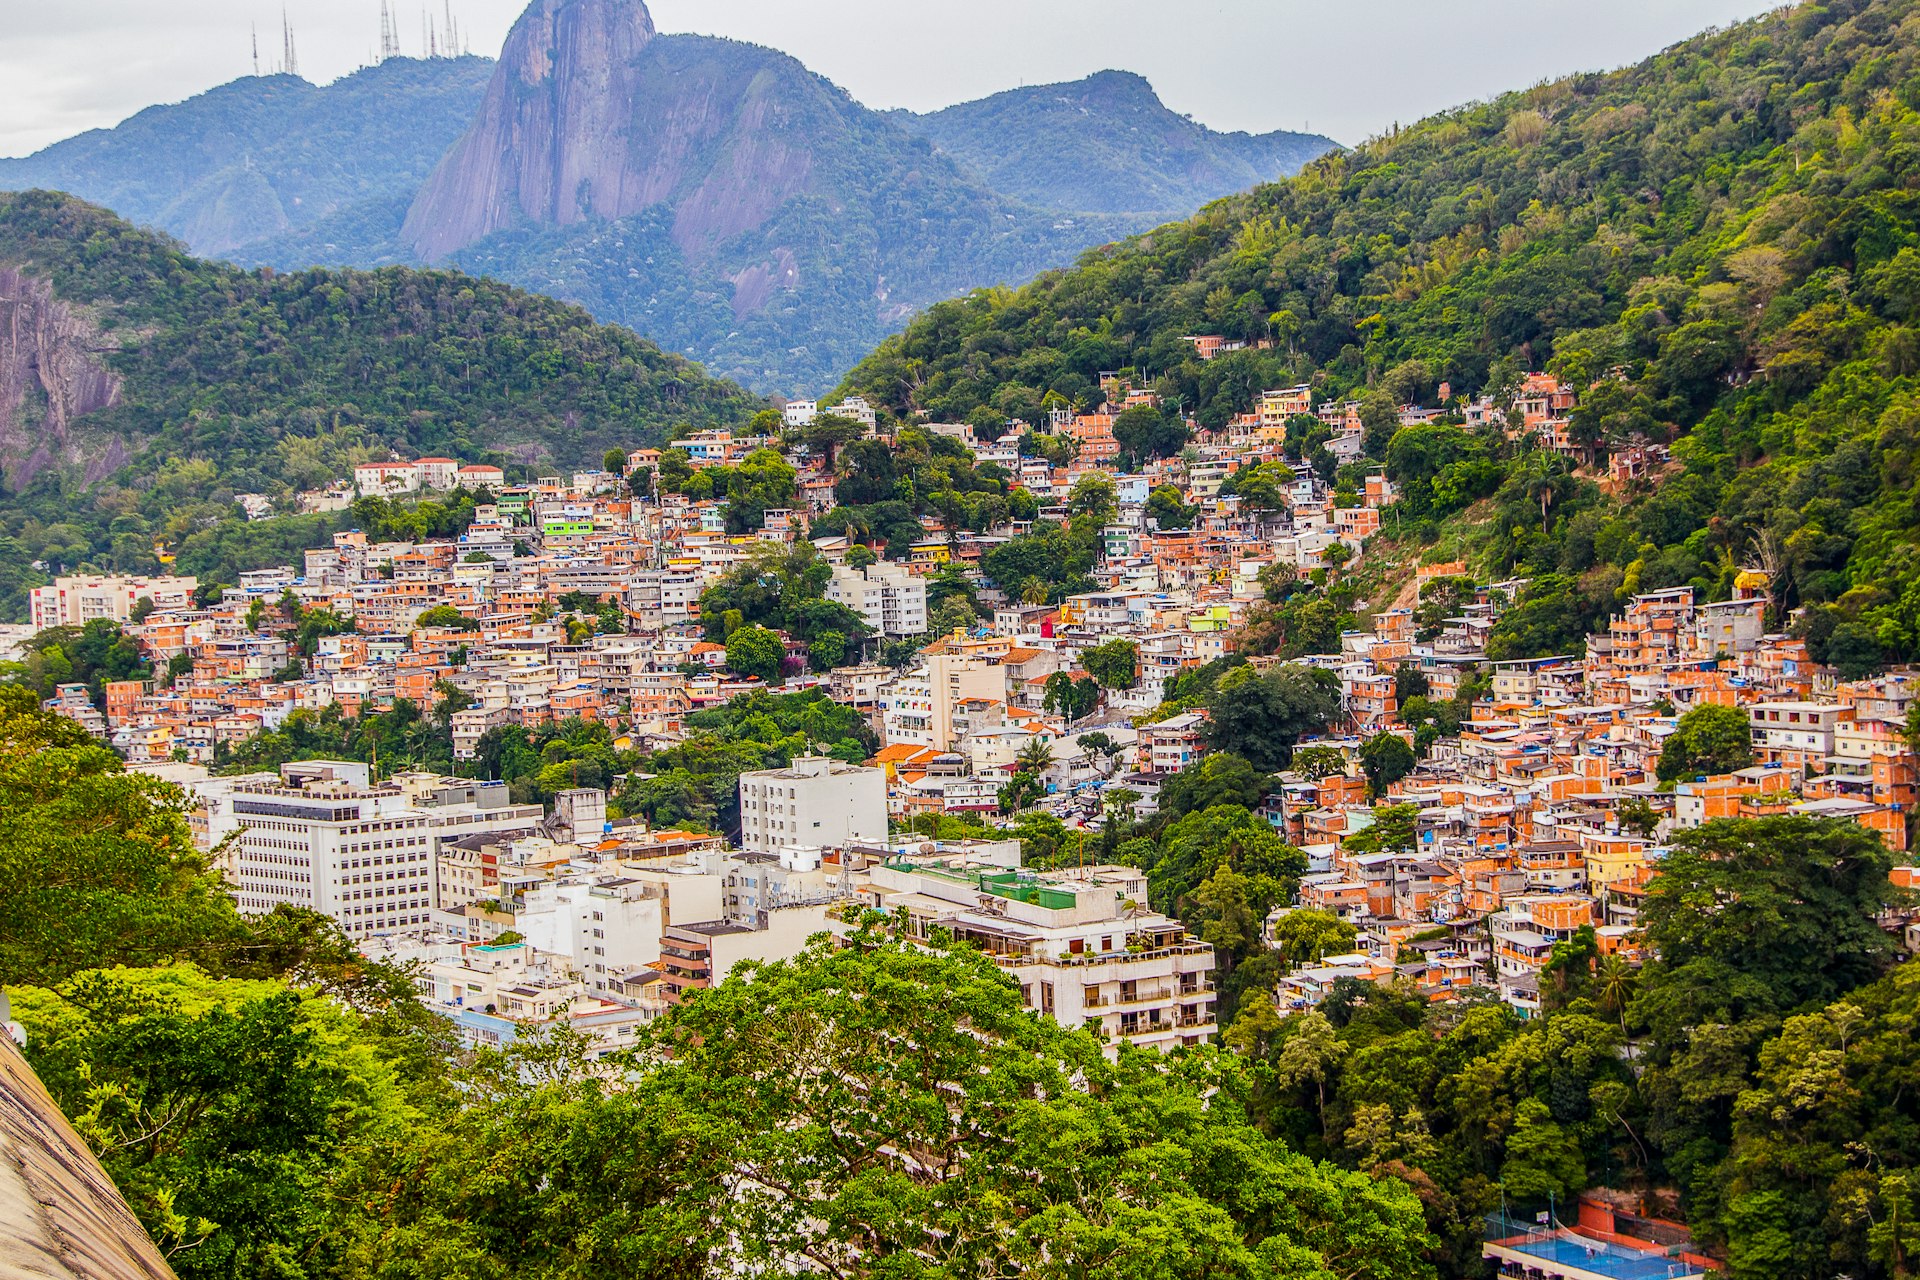 The colorful houses of Morro da Babilônia in the Copacabana neighborhood in Rio de Janeiro